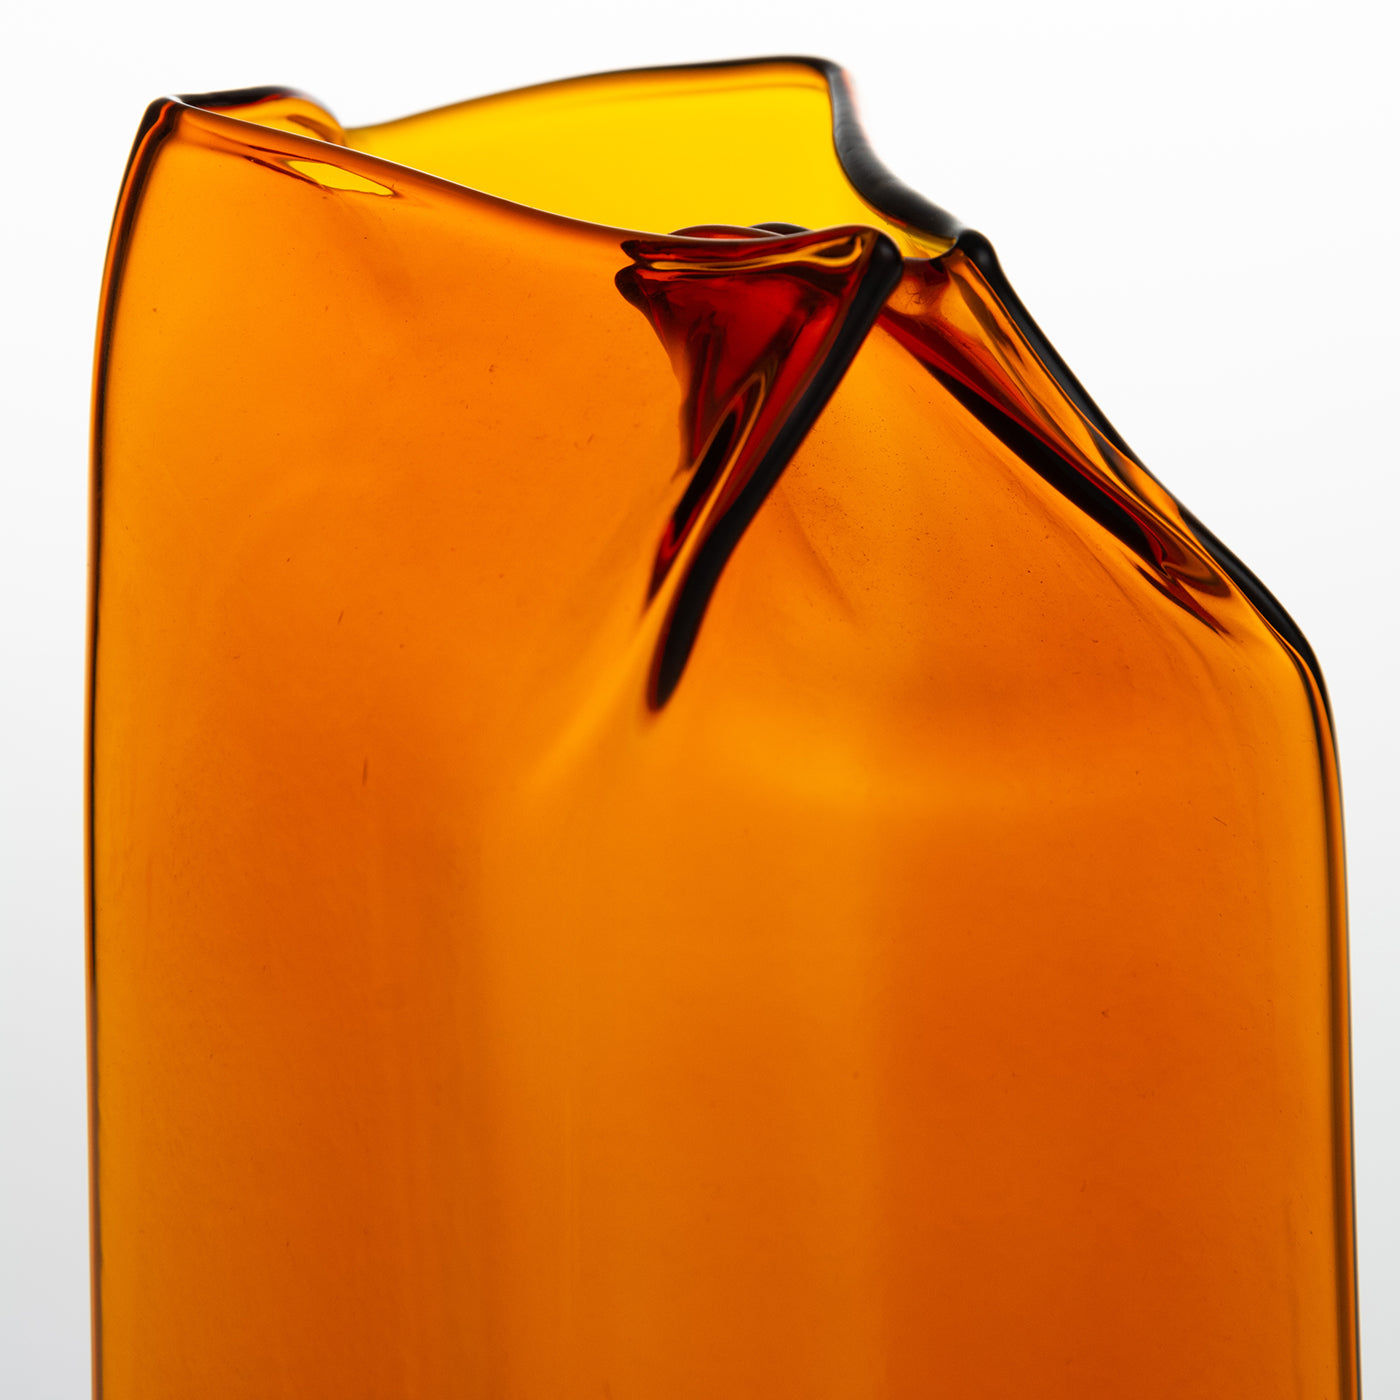 Pichet en verre ambré Bricco - Vue alternative 1